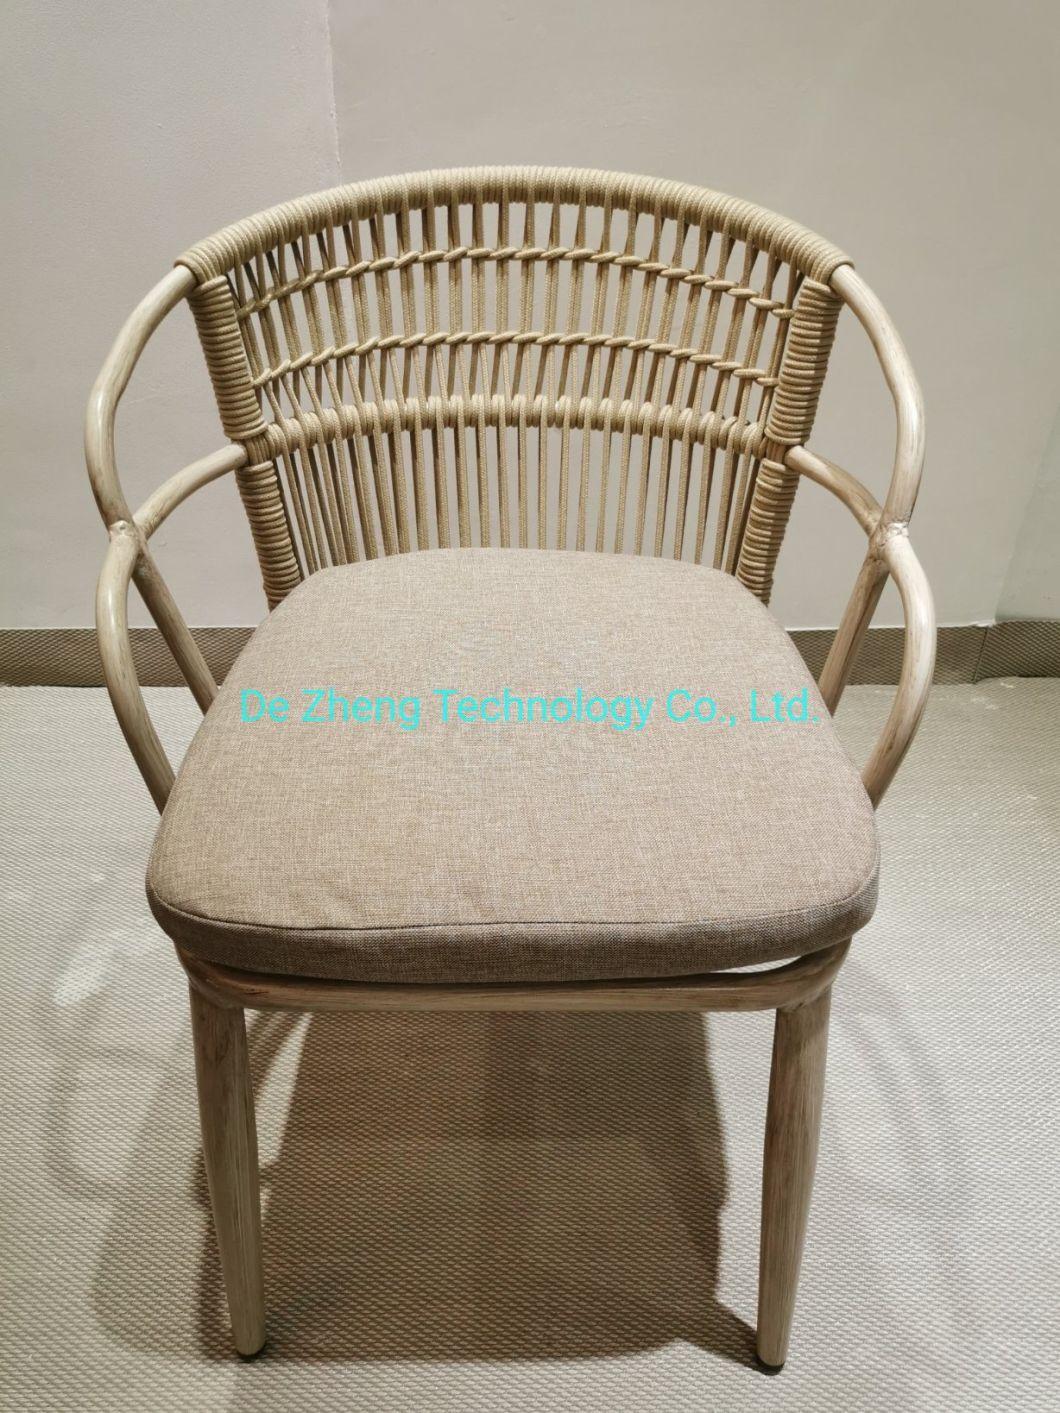 2021 Environmental Design Aluminum Outdoor Furniture Outdoor Chair Garden Durable Dining Chair for Outdoor